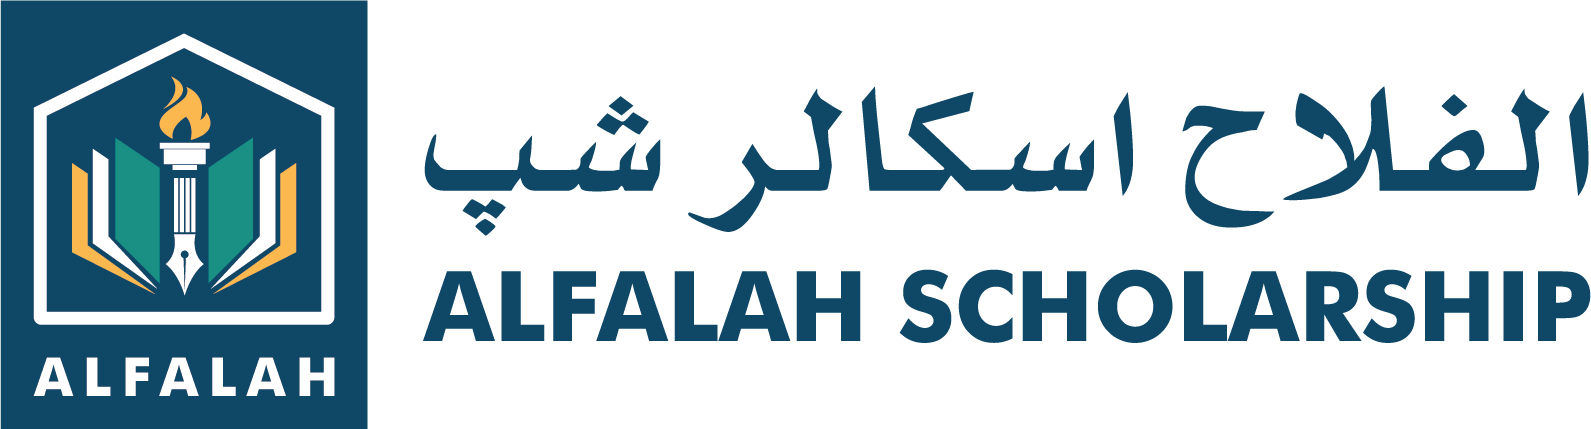 ALFALAH Scholarship – ALFALAH logo